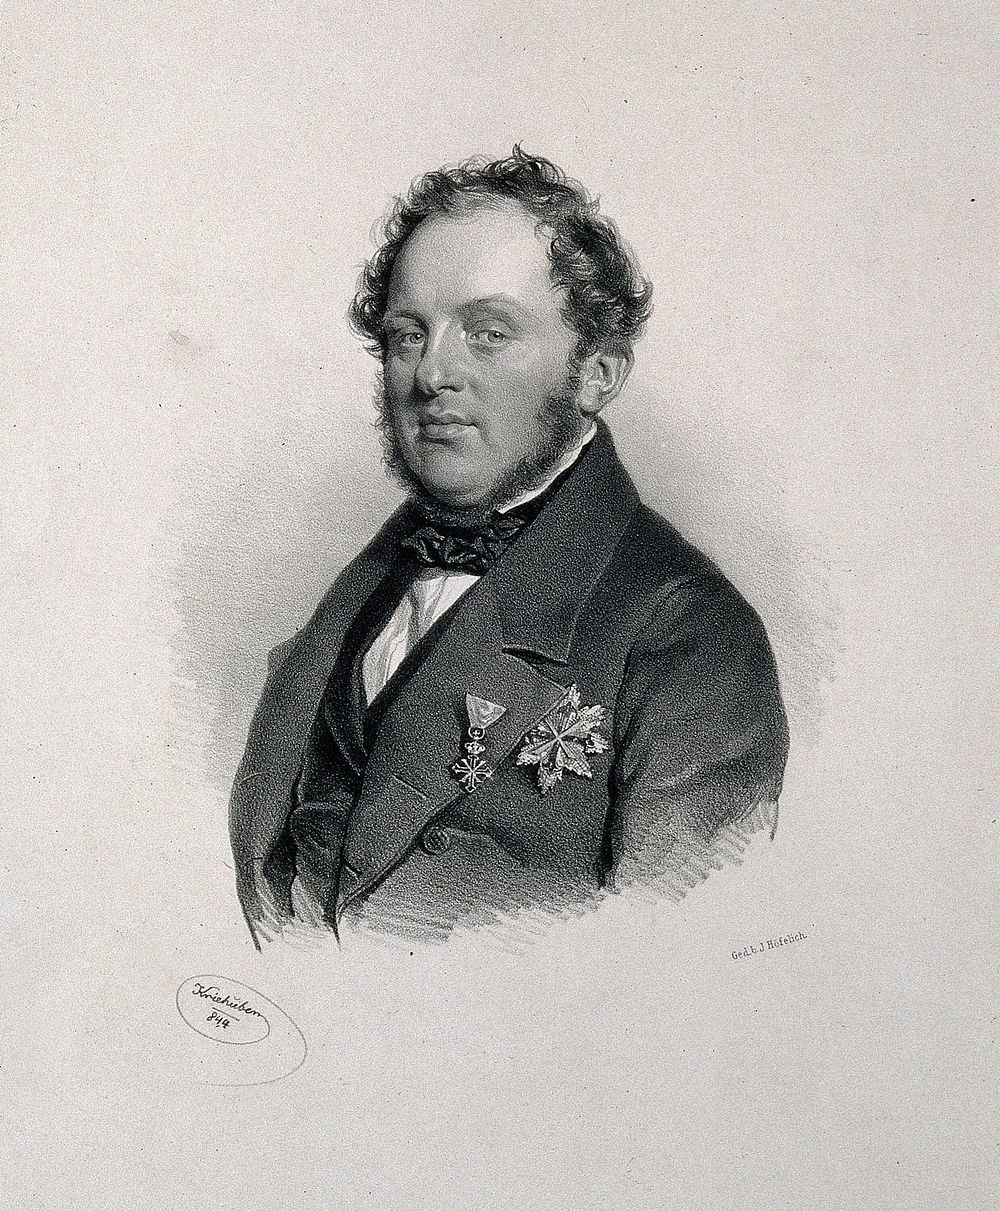 Joseph Brenner, Edler von Felsach. Lithograph by J. Kriehuber, 1844.